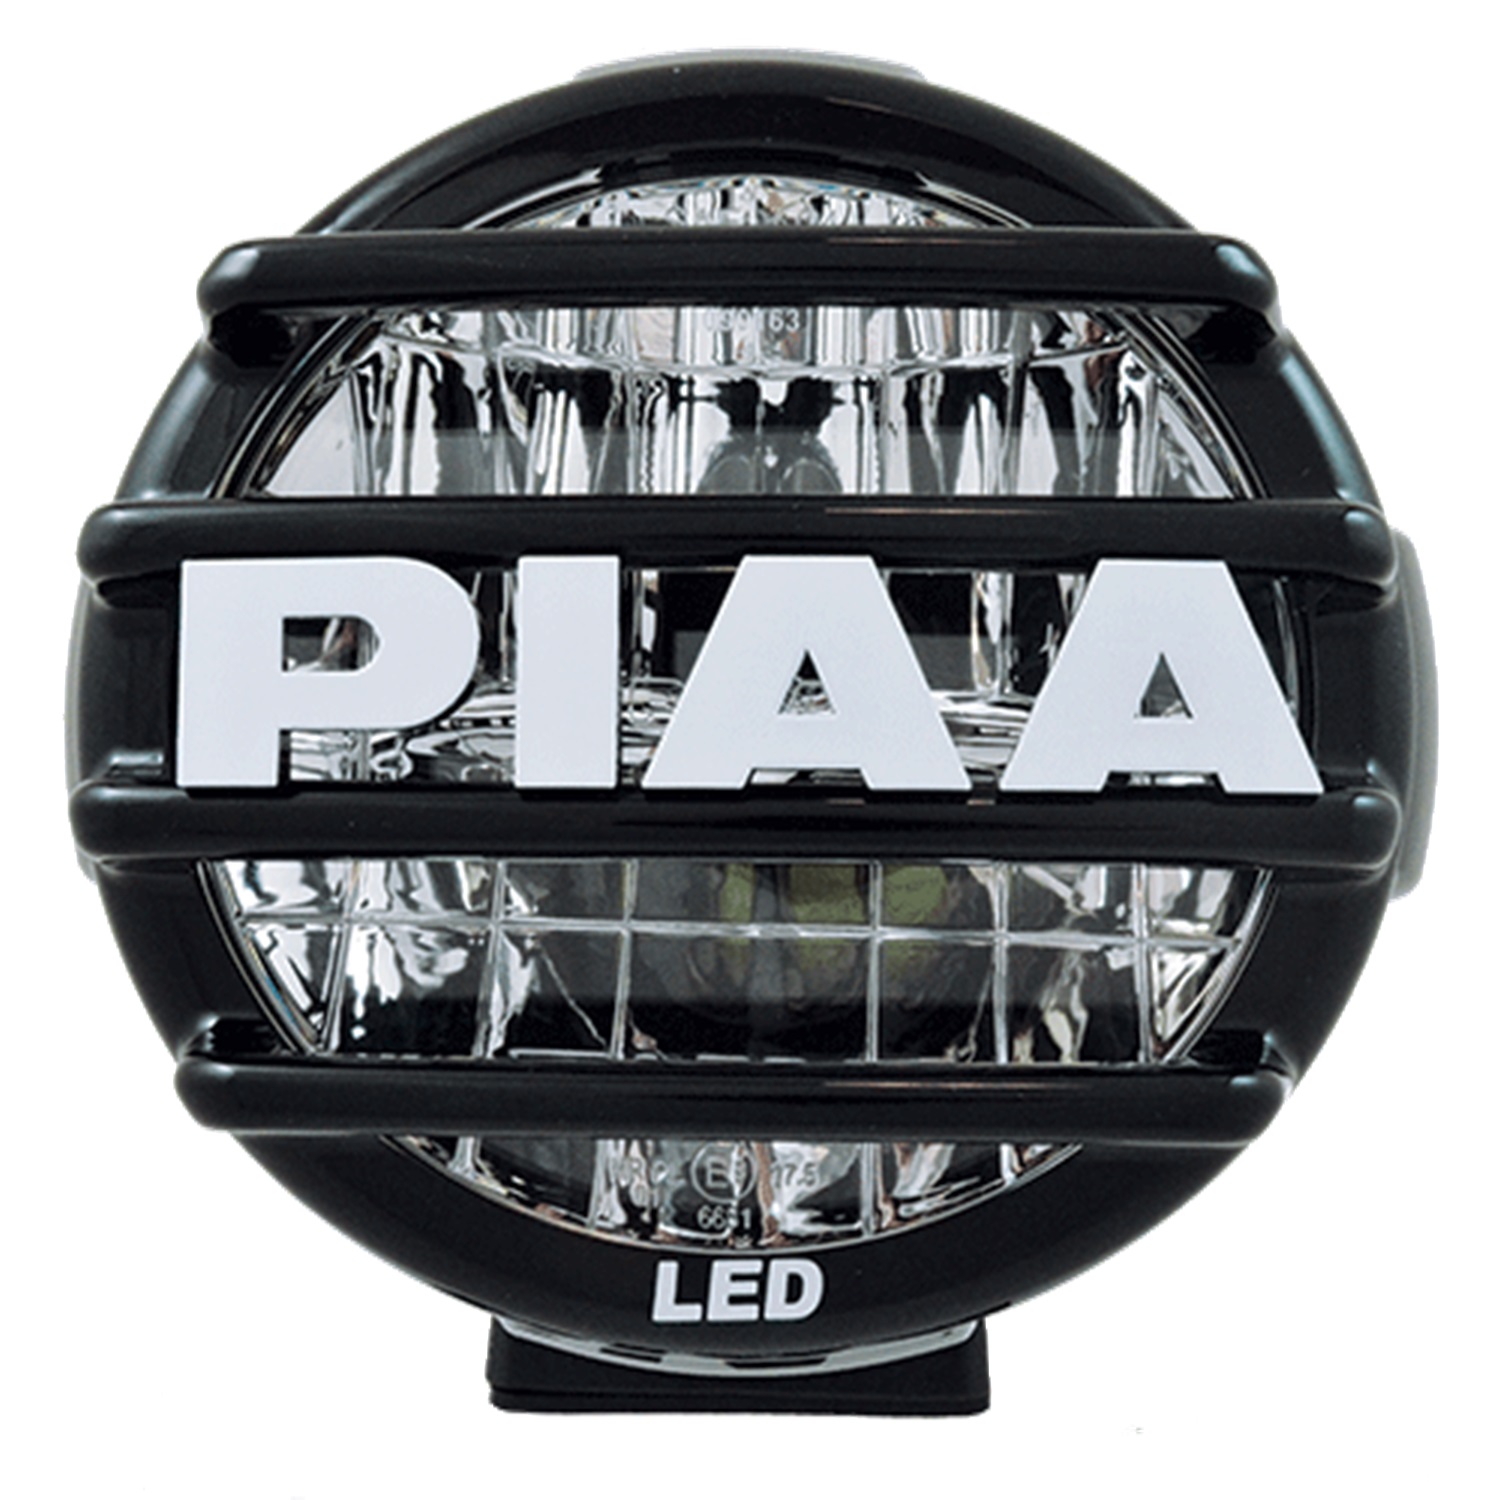 PIAA PIAA 5702 570 Driving Lamp